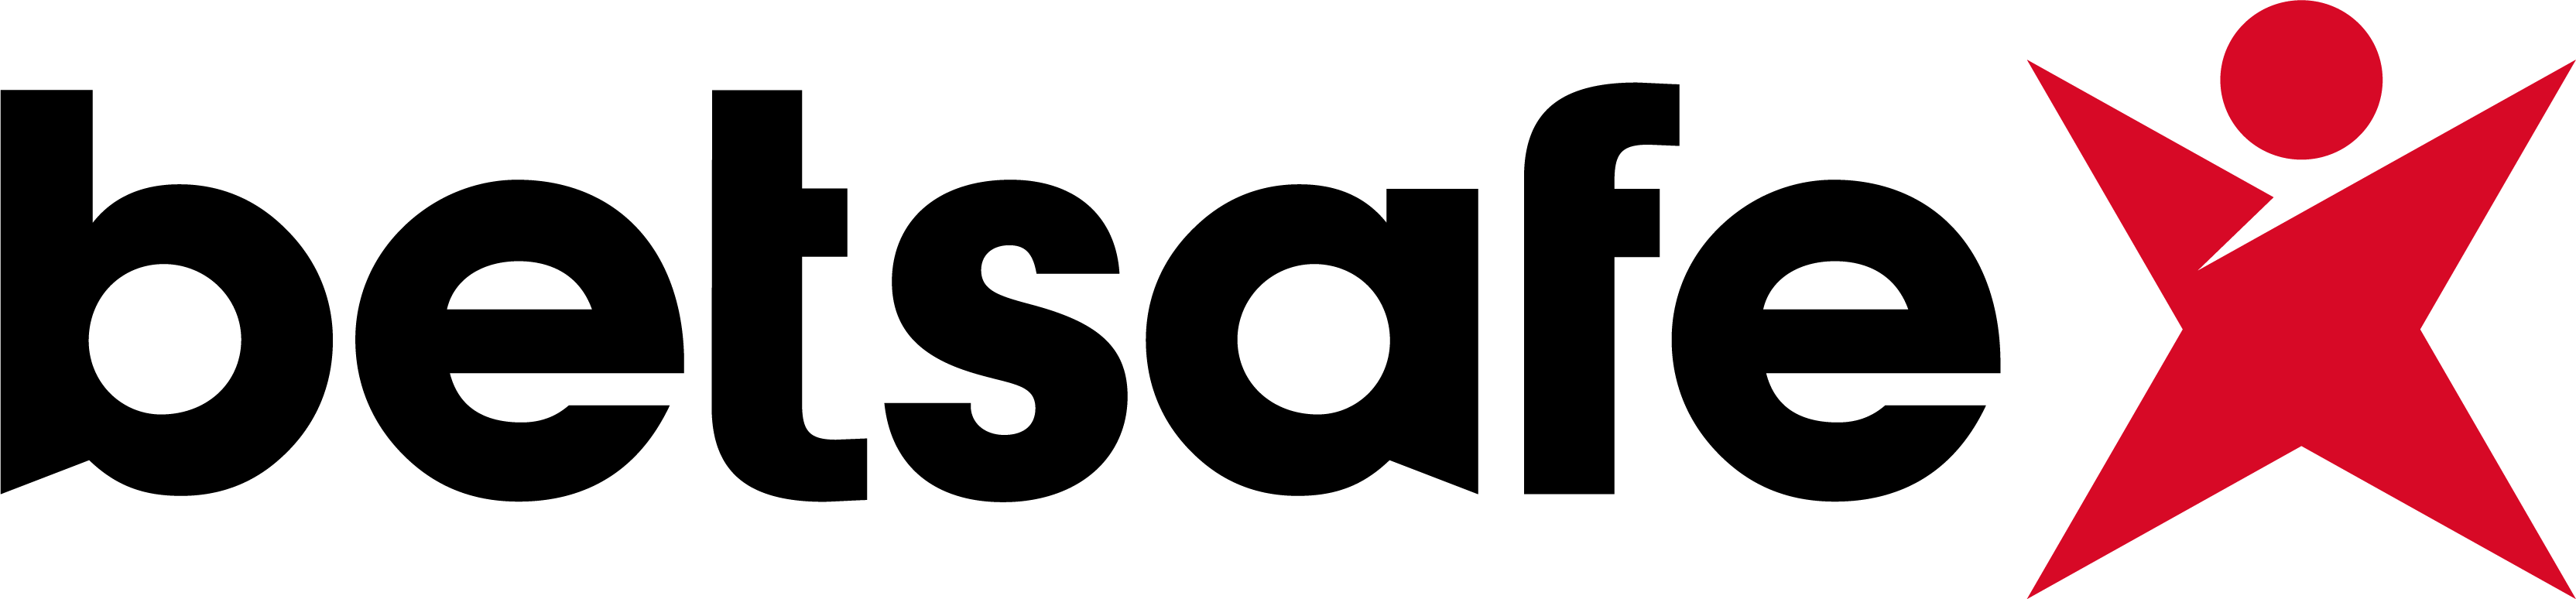 Betsafe Bonus Logo